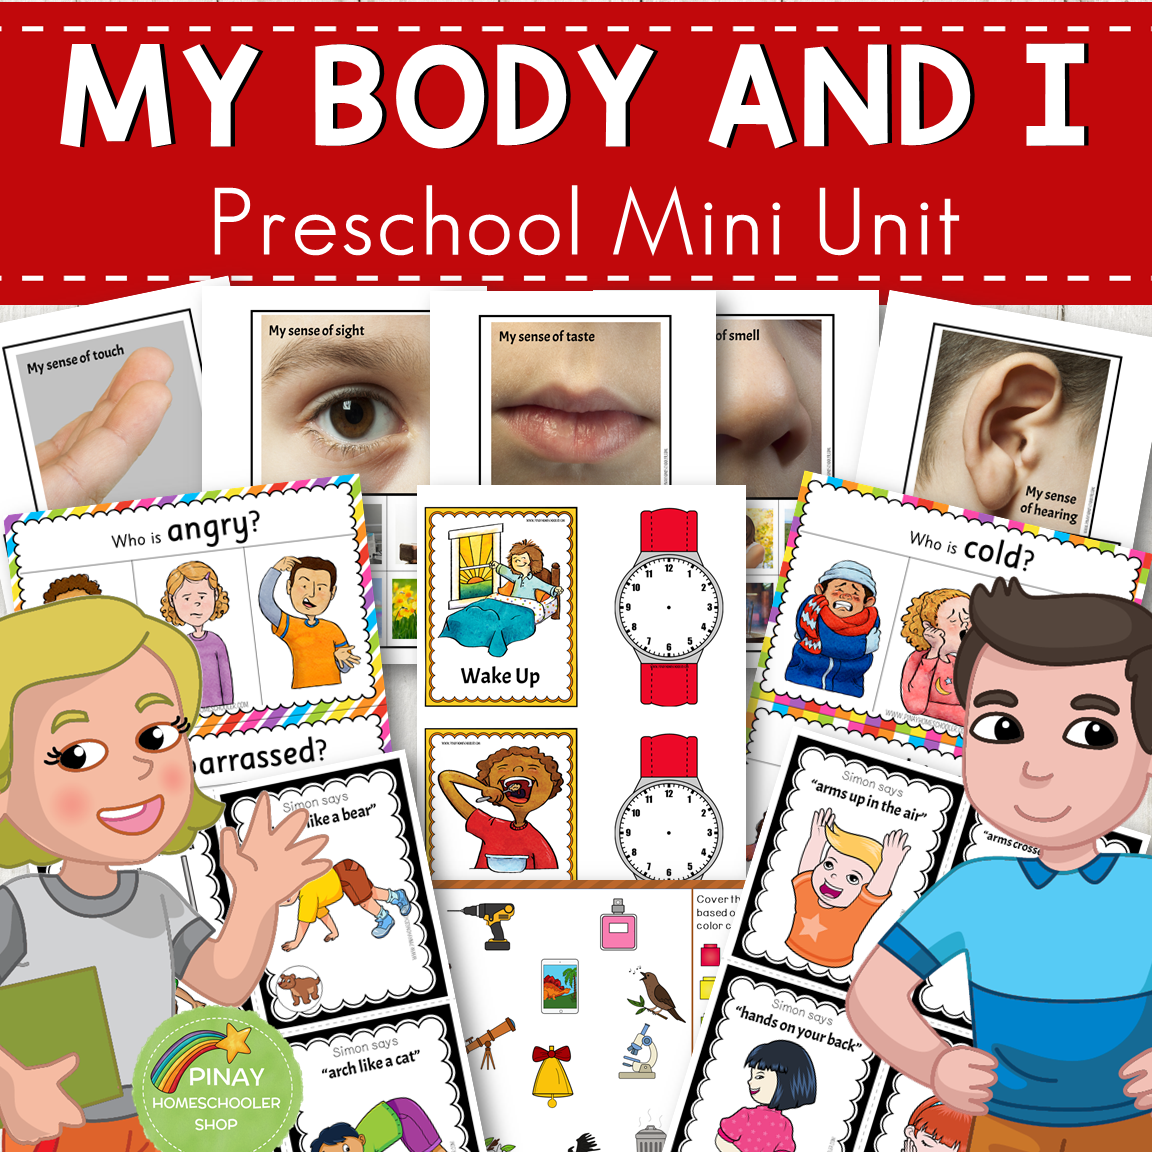 My Body and I Preschool Mini Unit